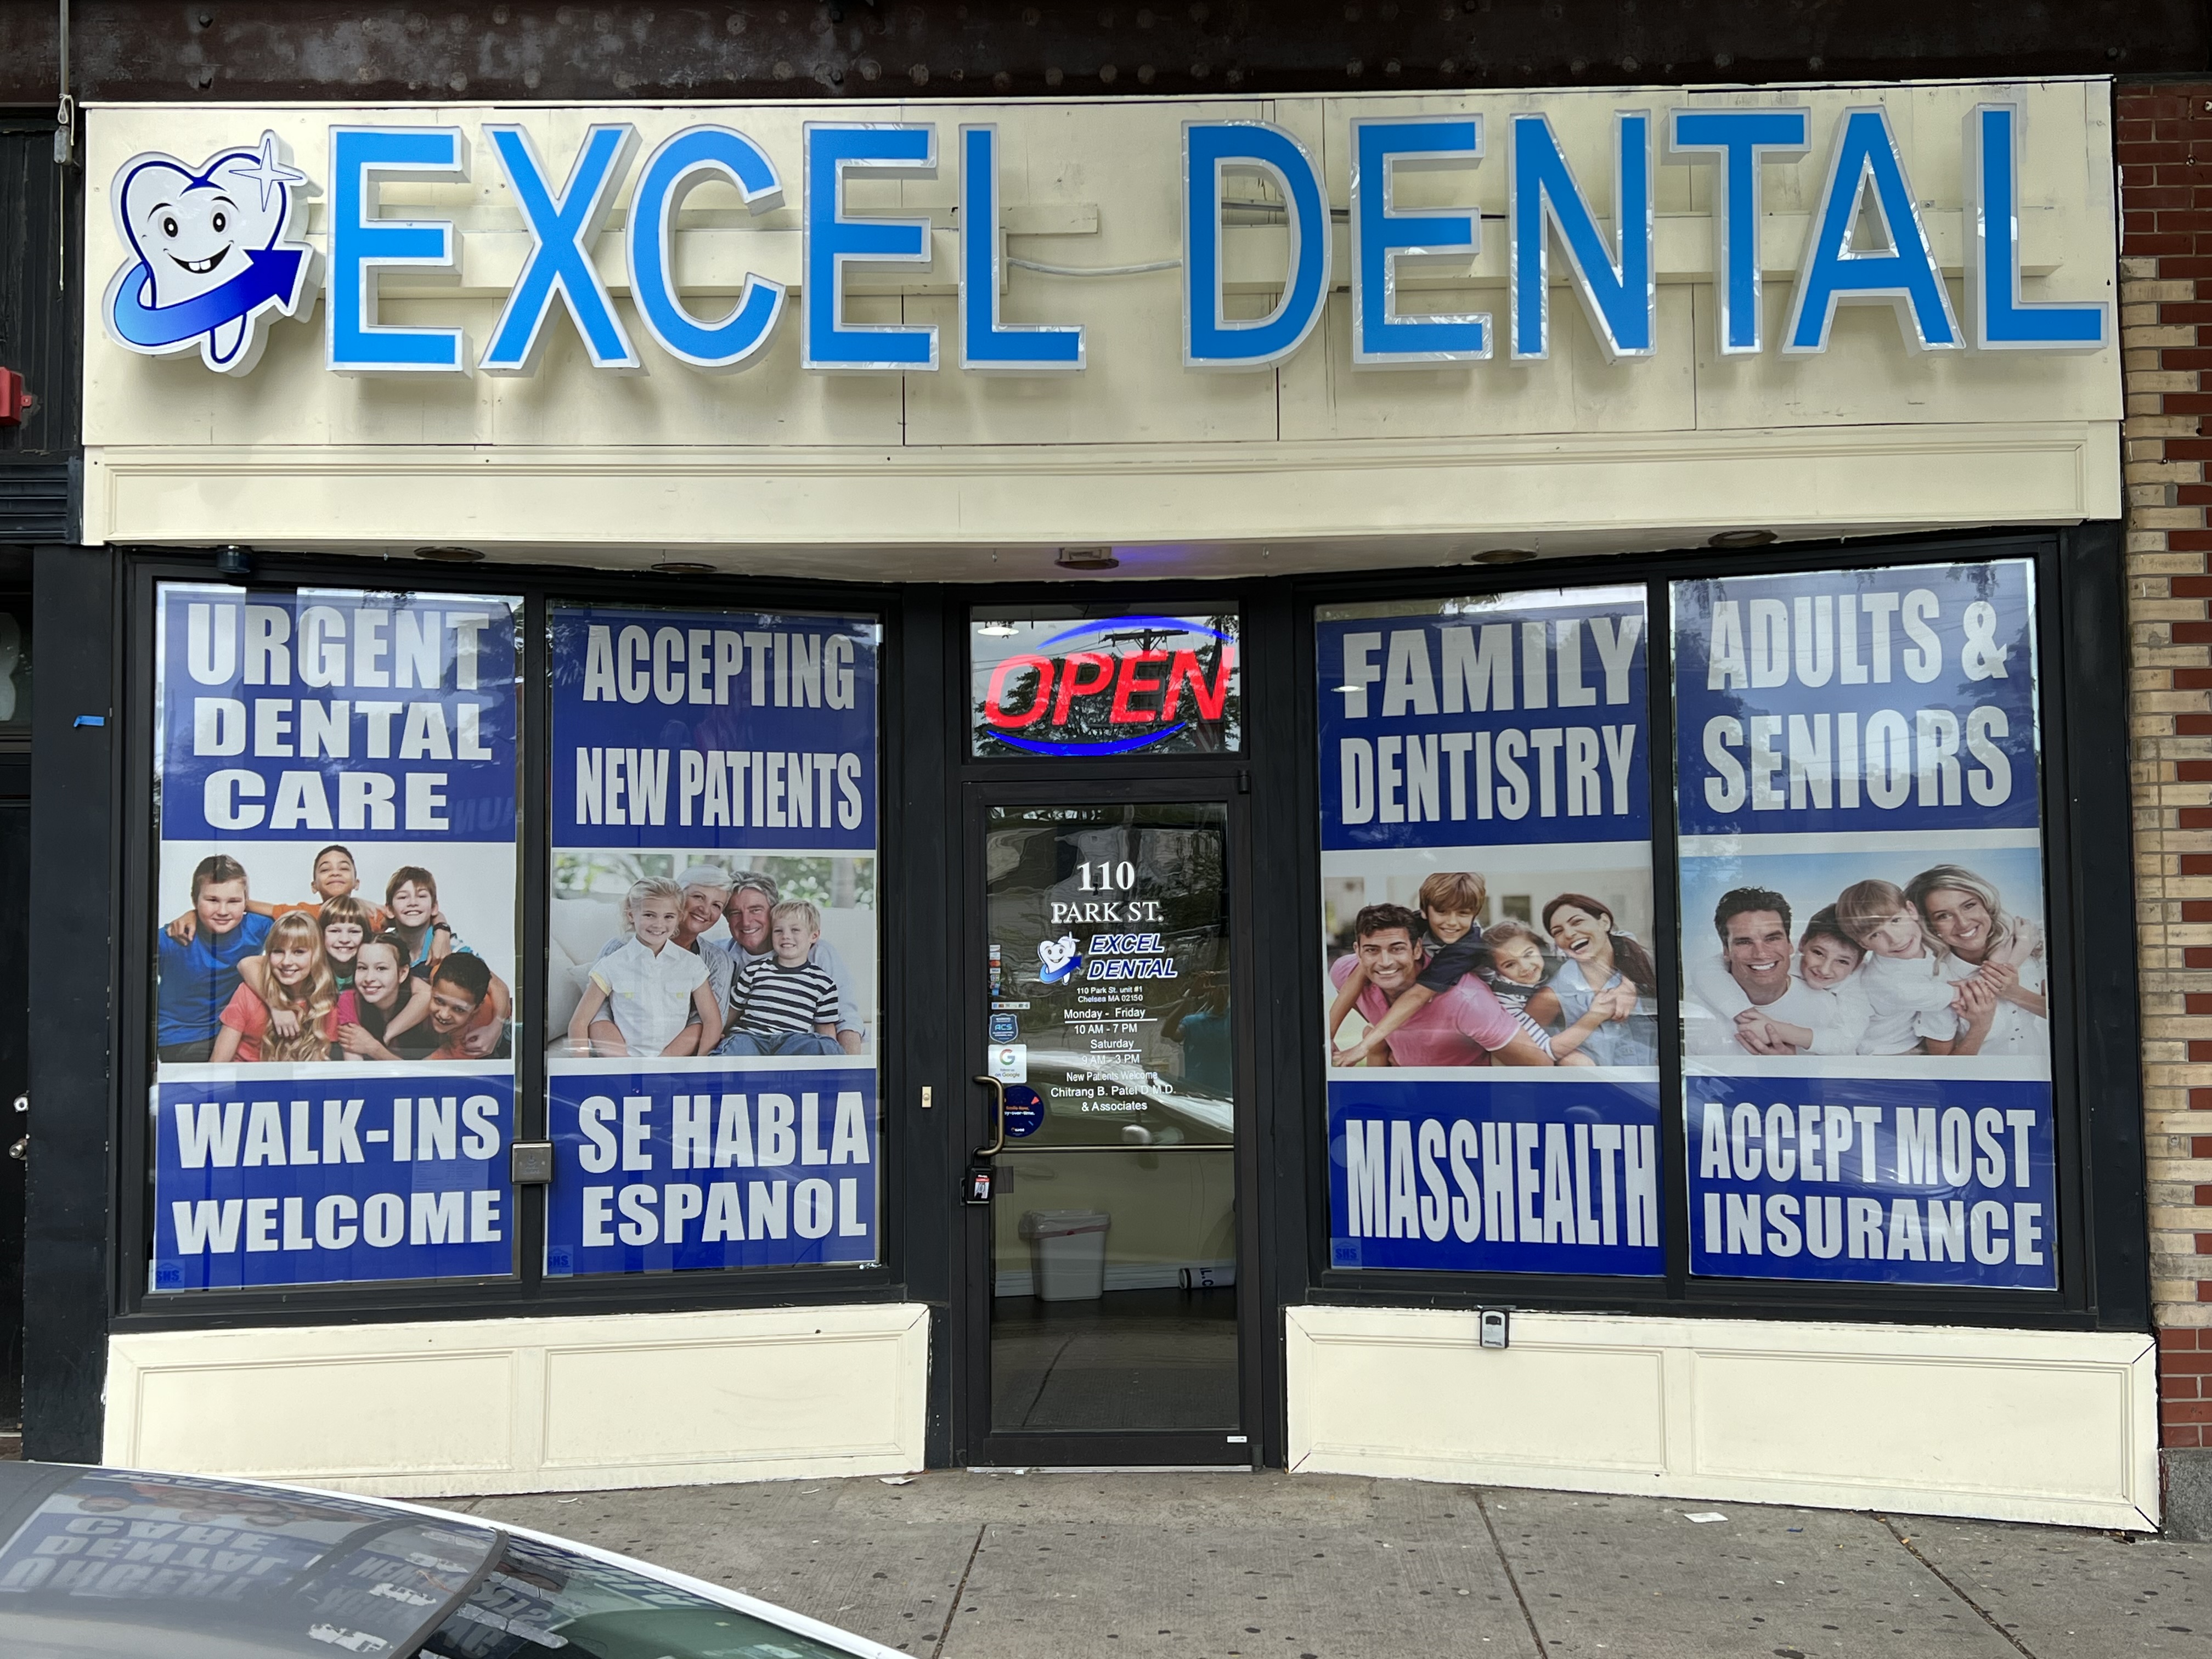 Excel Dental Chelsea reviews | 110 Park St - Chelsea MA